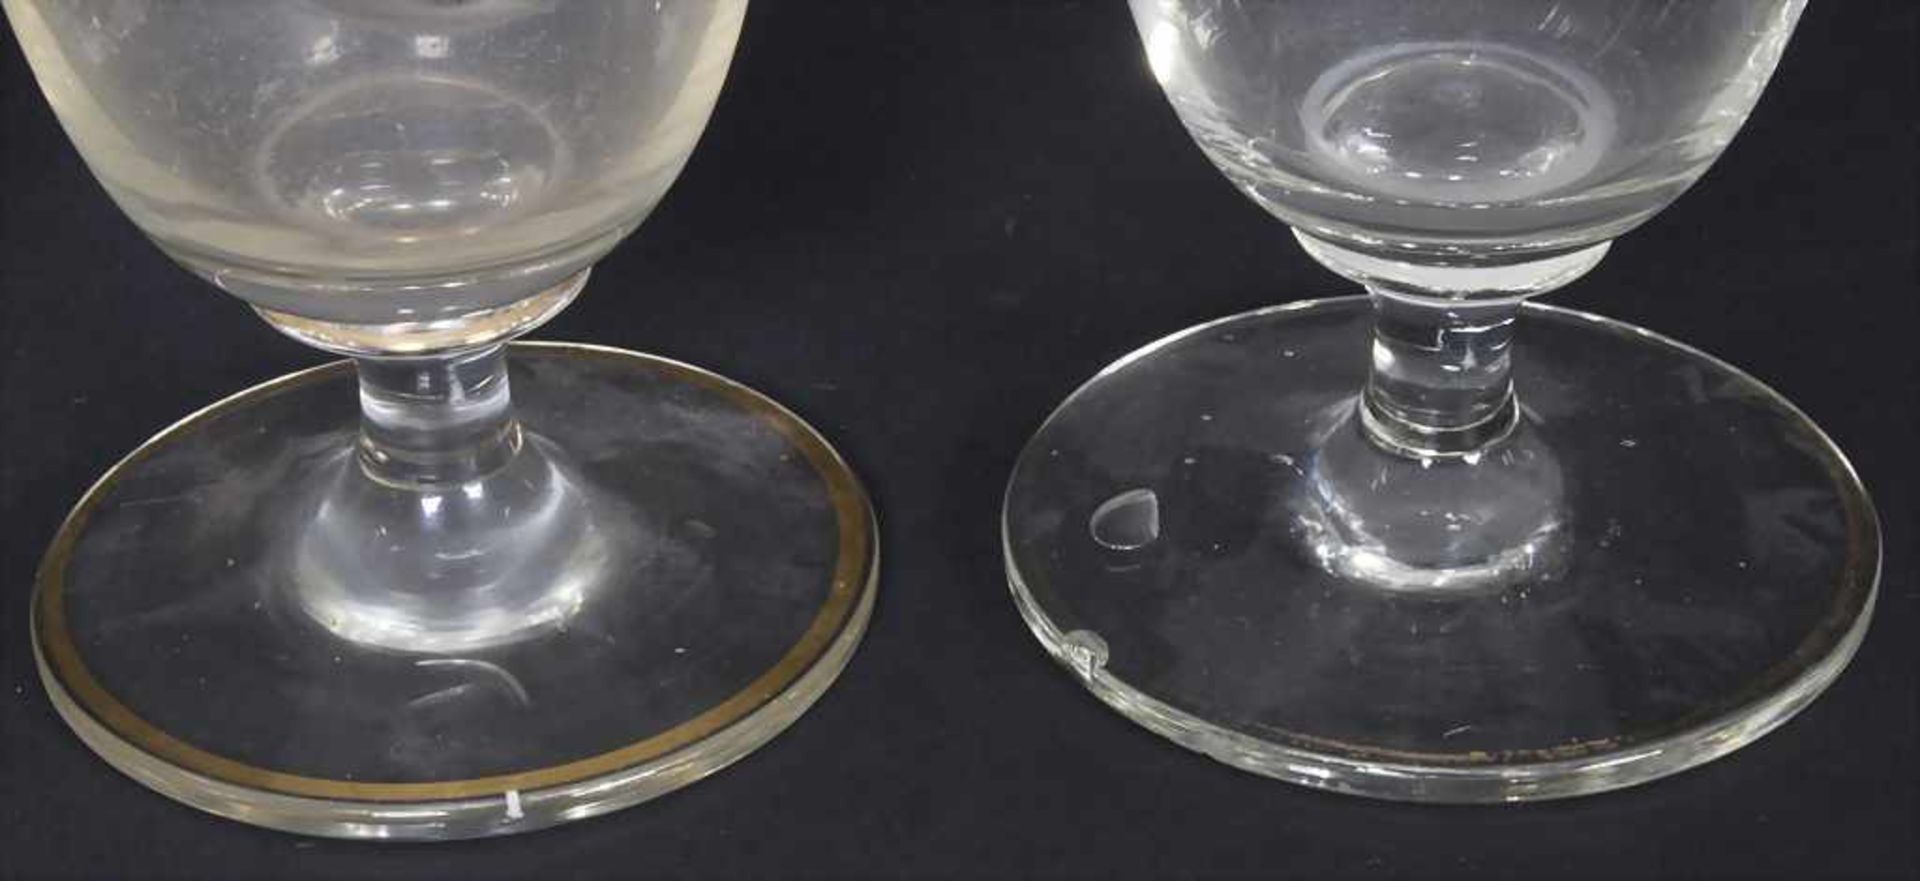 Saftkrug und 6 Gläser mit Hirschmotiven / A decanter and 6 glasses with deer decor, um 1900 - Image 6 of 6